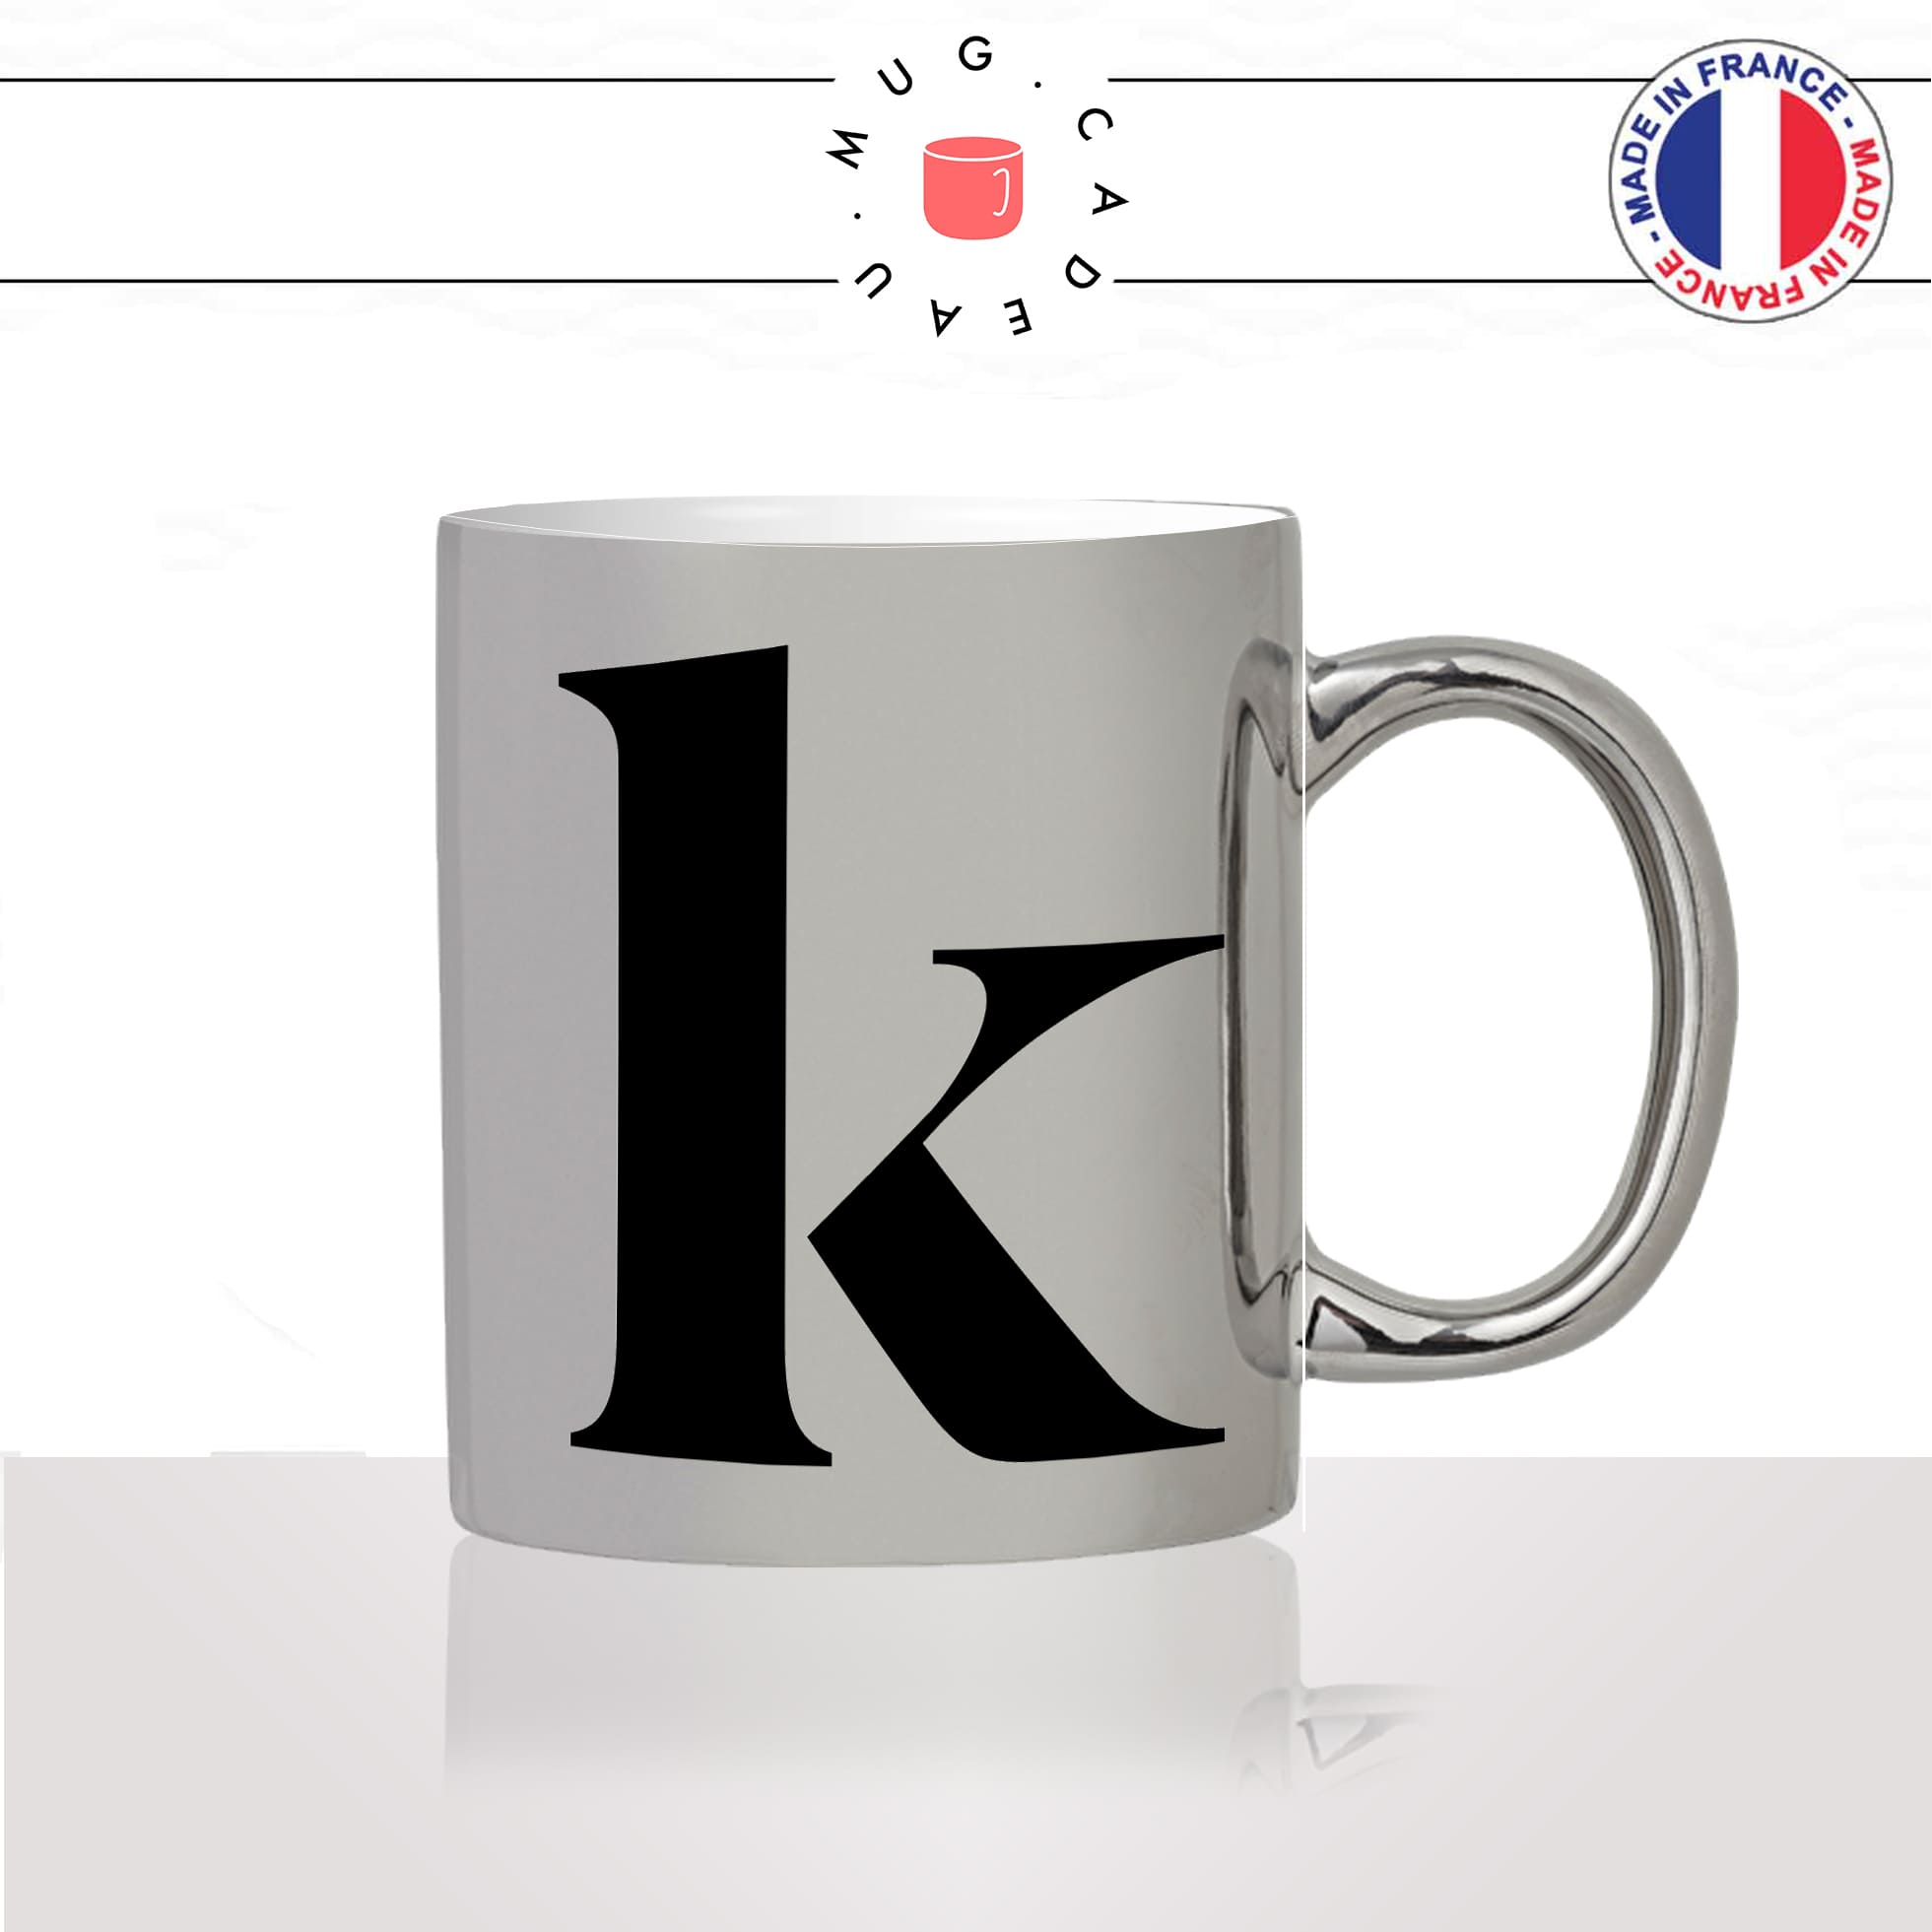 mug-tasse-argent-argenté-silver-initiale-K-karol-karine-karina-majuscule-prenom-lettre-collegue-original-idée-cadeau-fun-cool-café-thé2